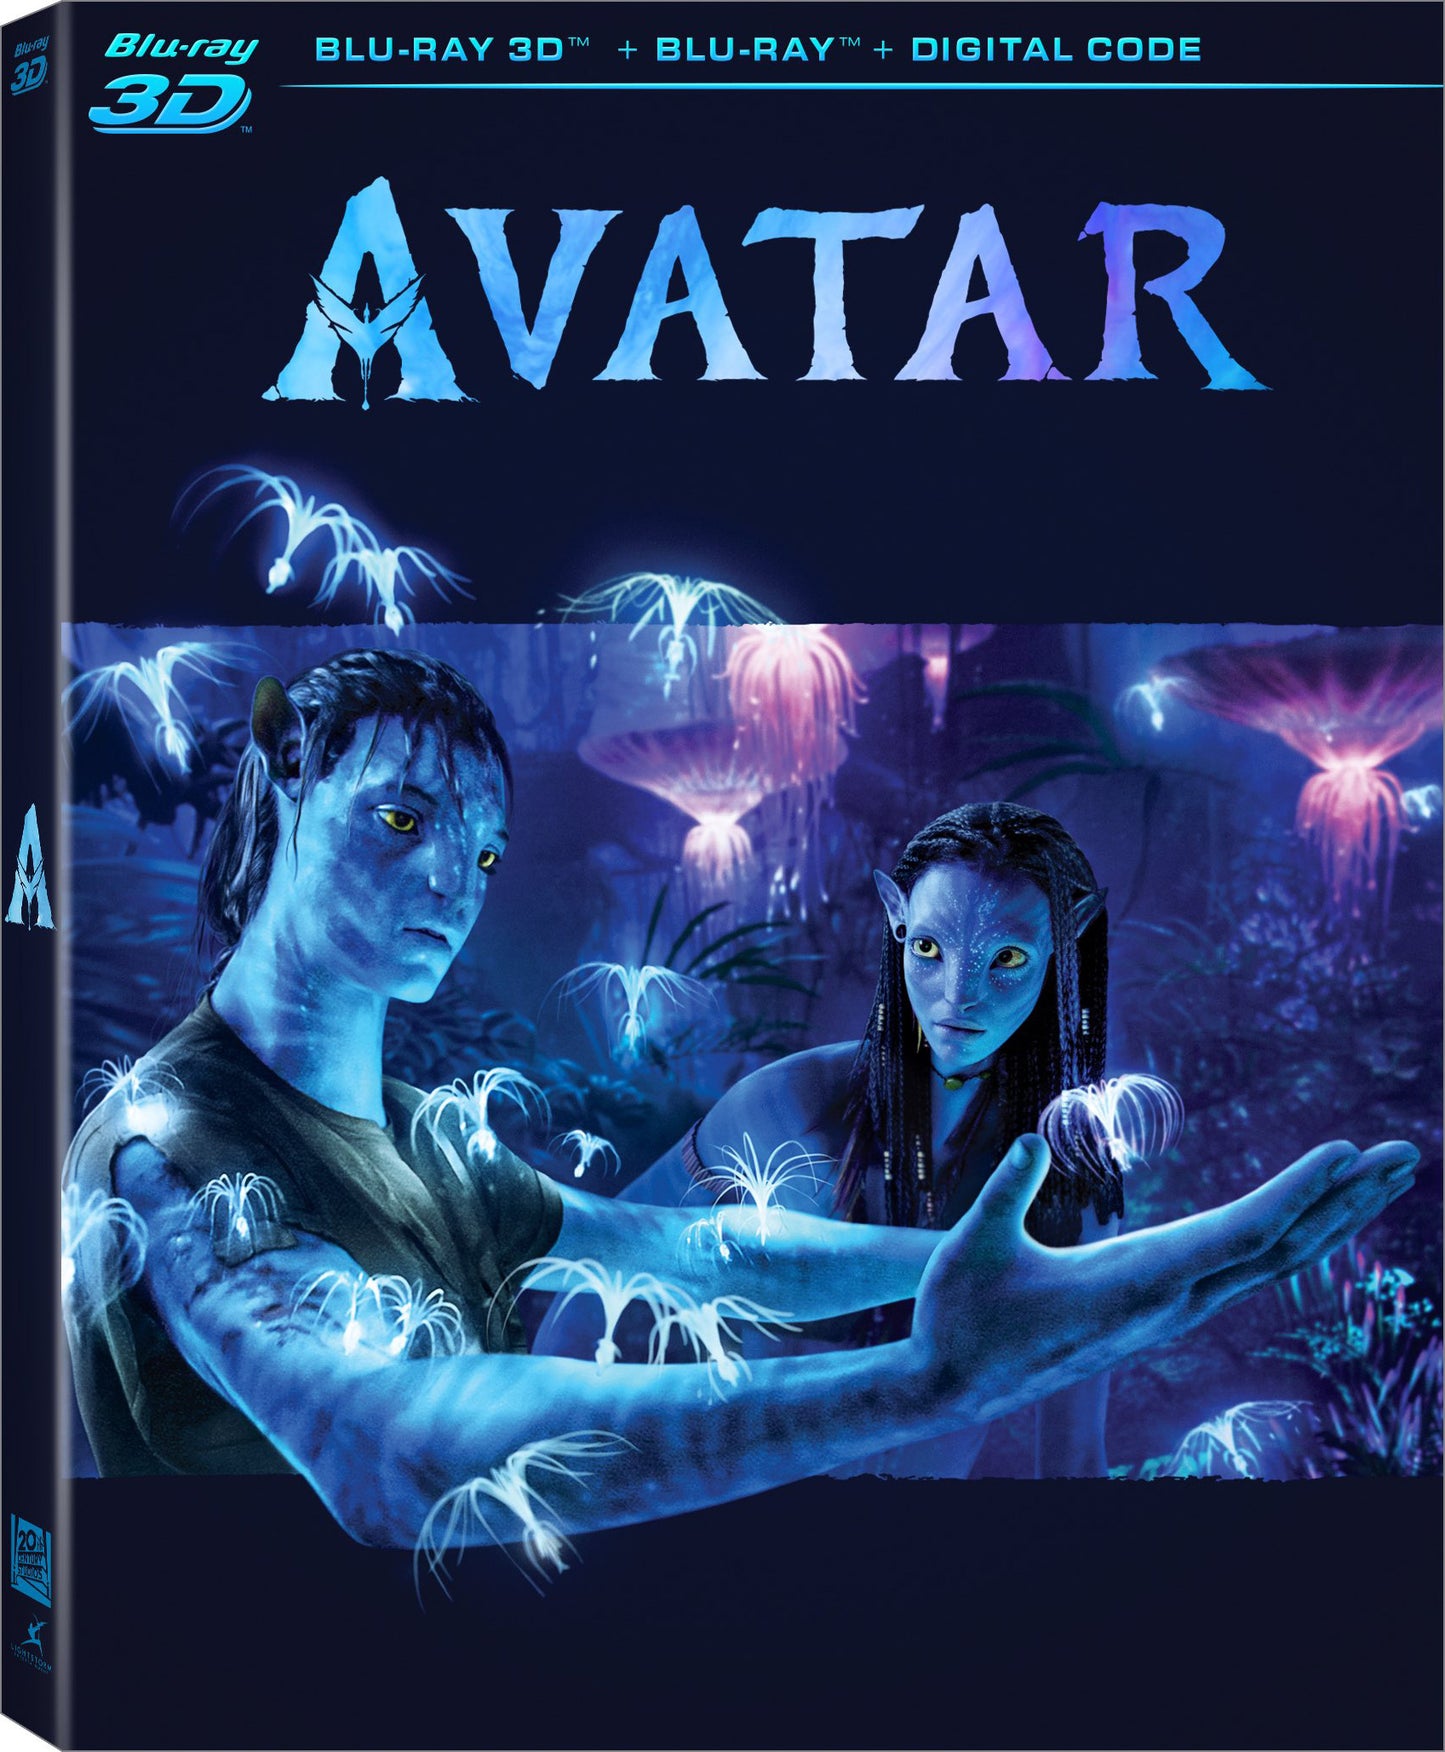 Avatar 3D (2009)